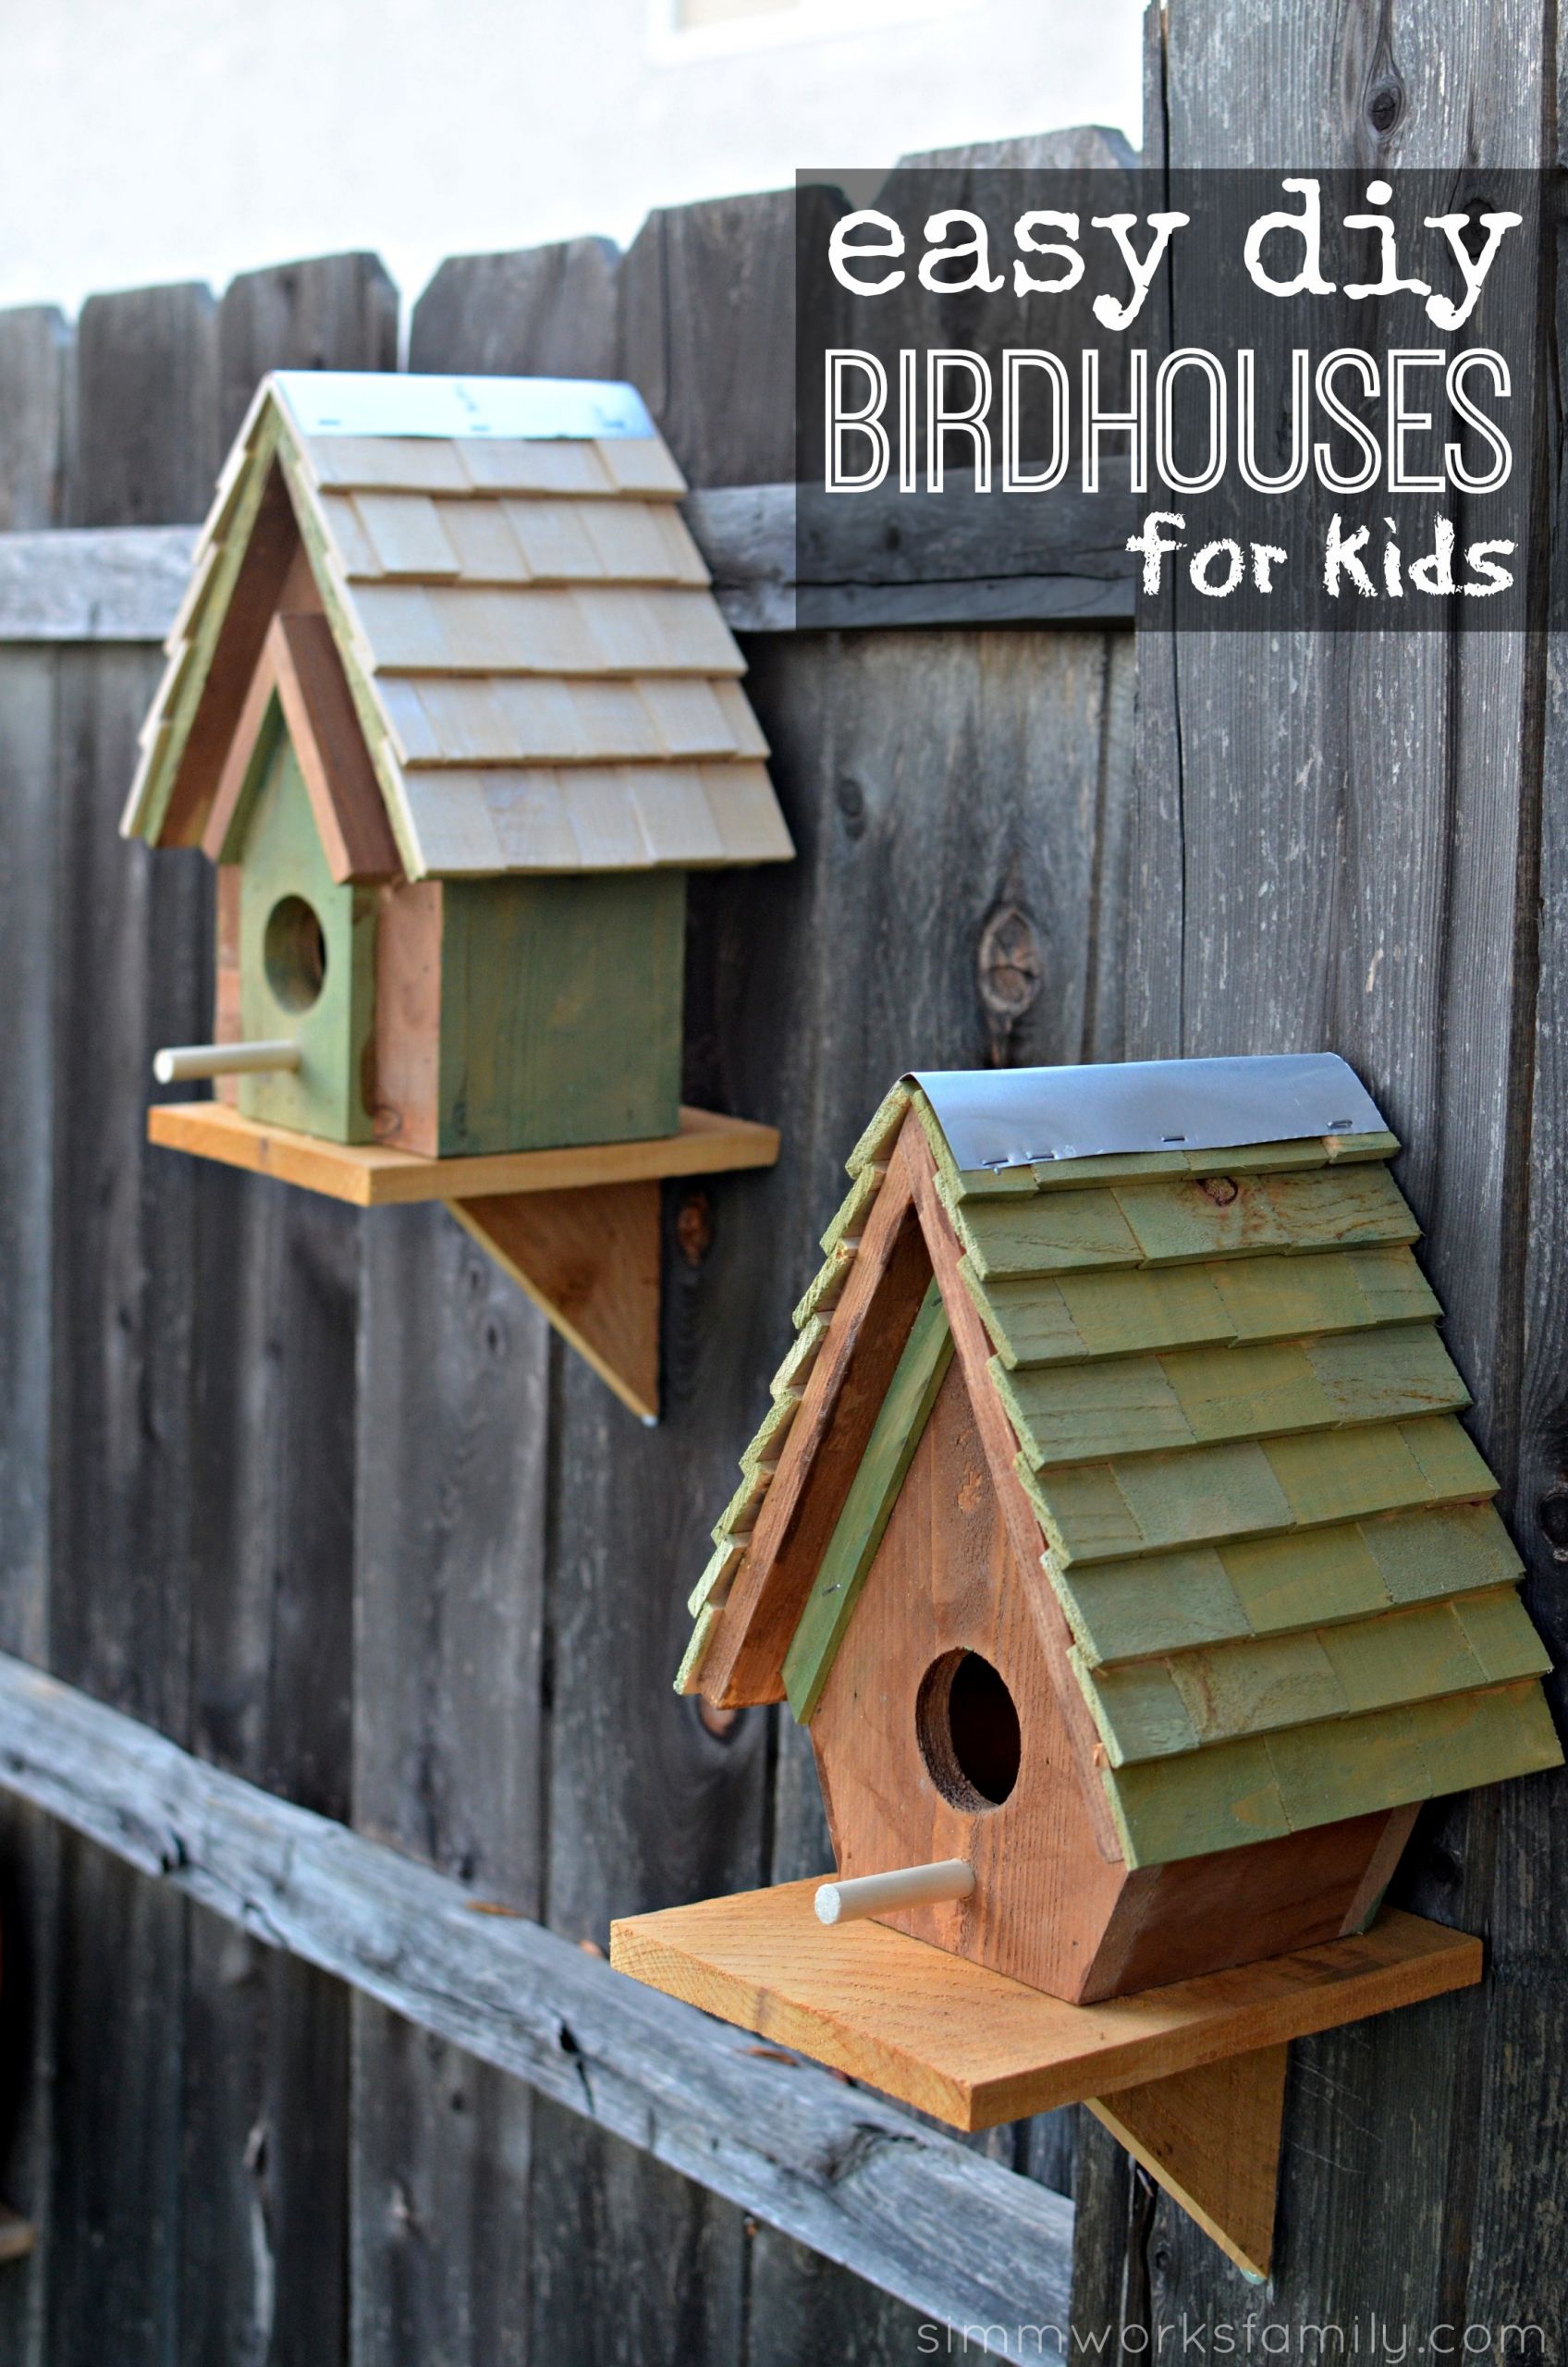 DIY Wooden Bird House
 DIY Birdhouses Turning Inspiration into Reality